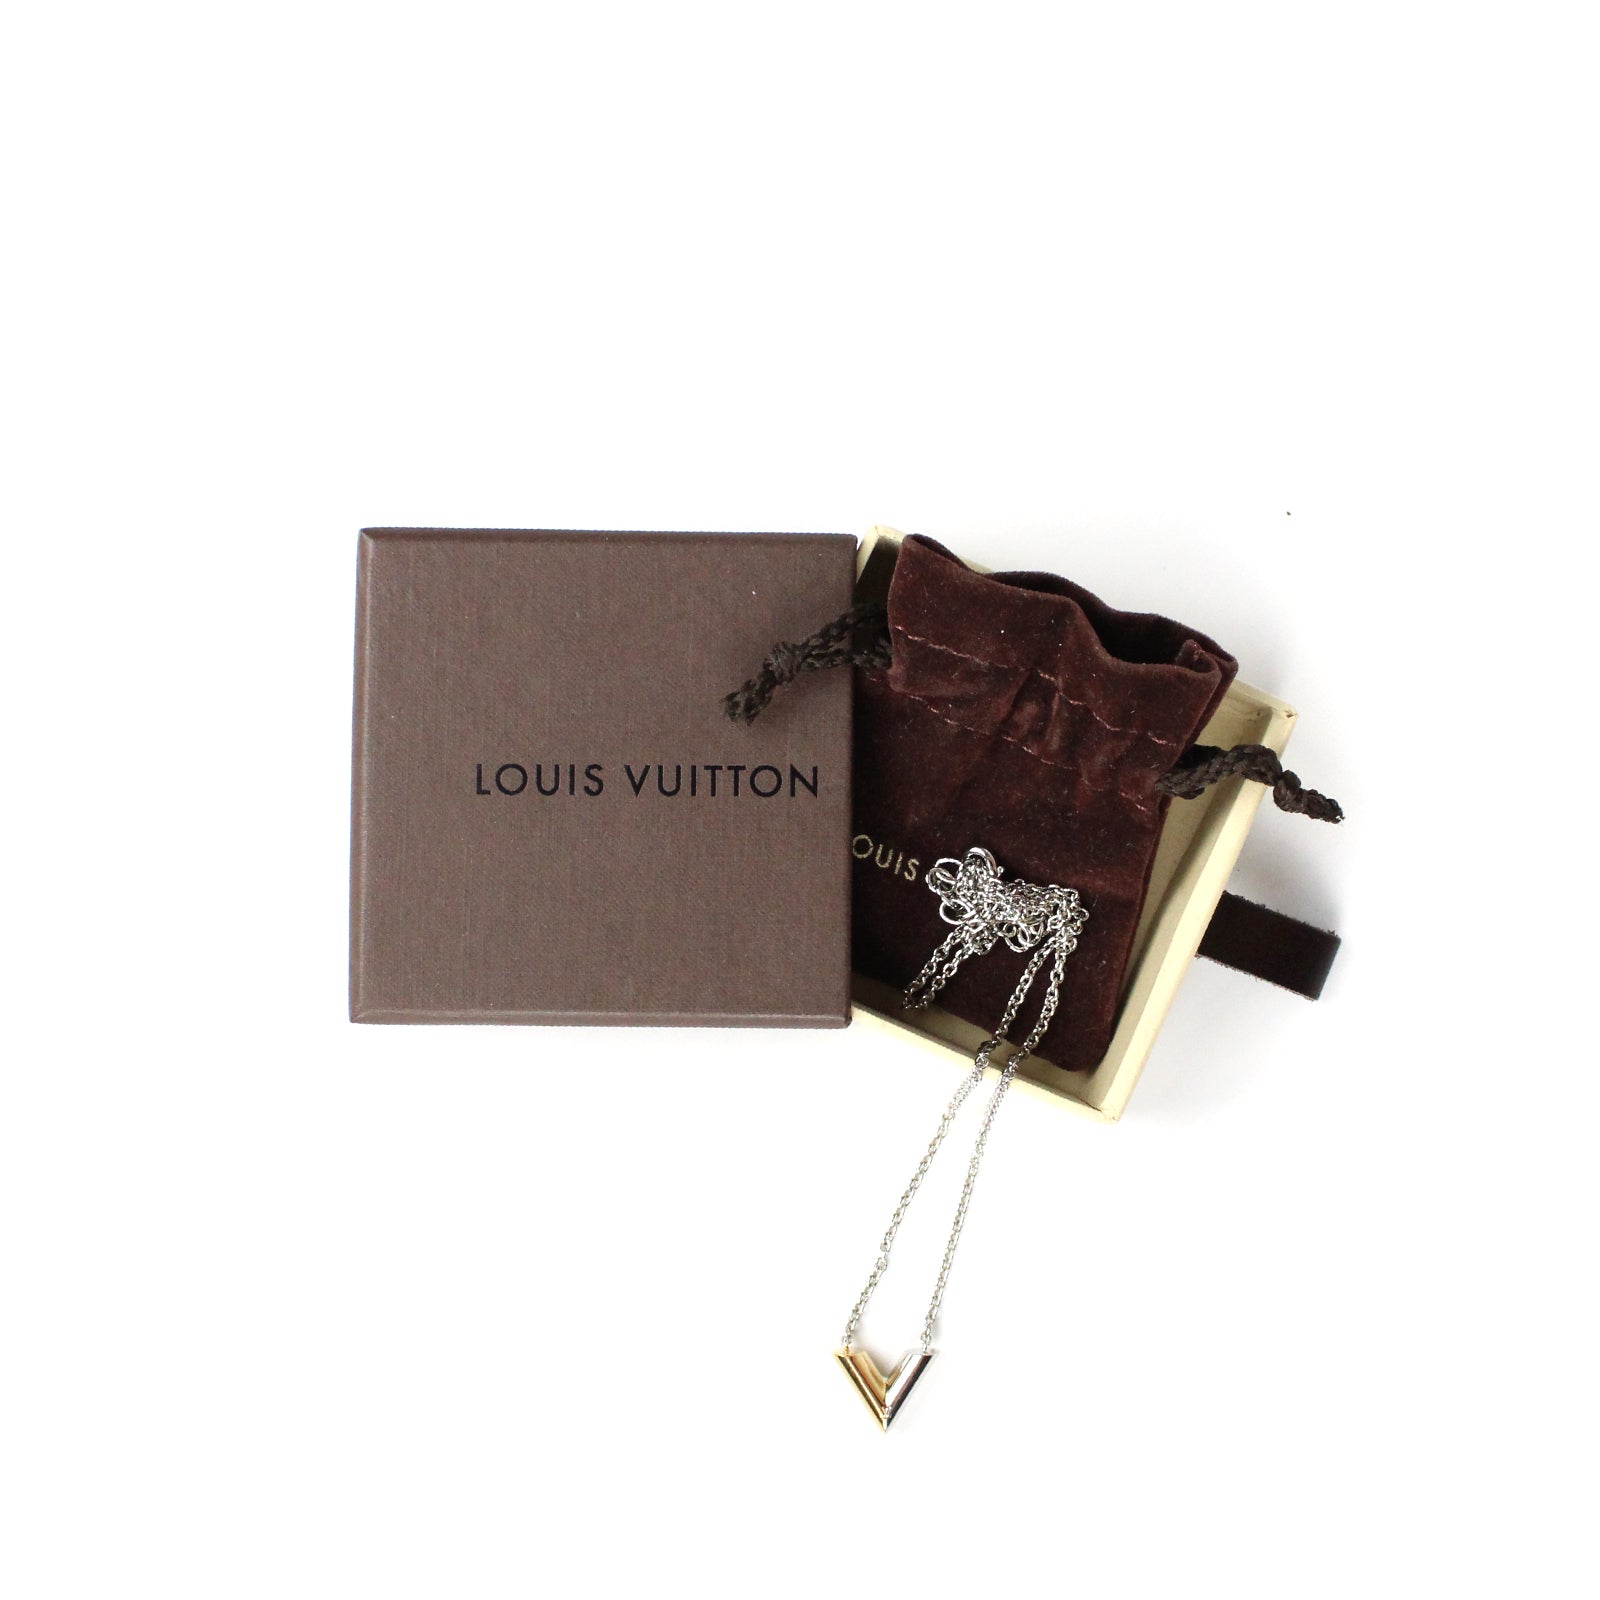 LOUIS VUITTON - Collier Essential V